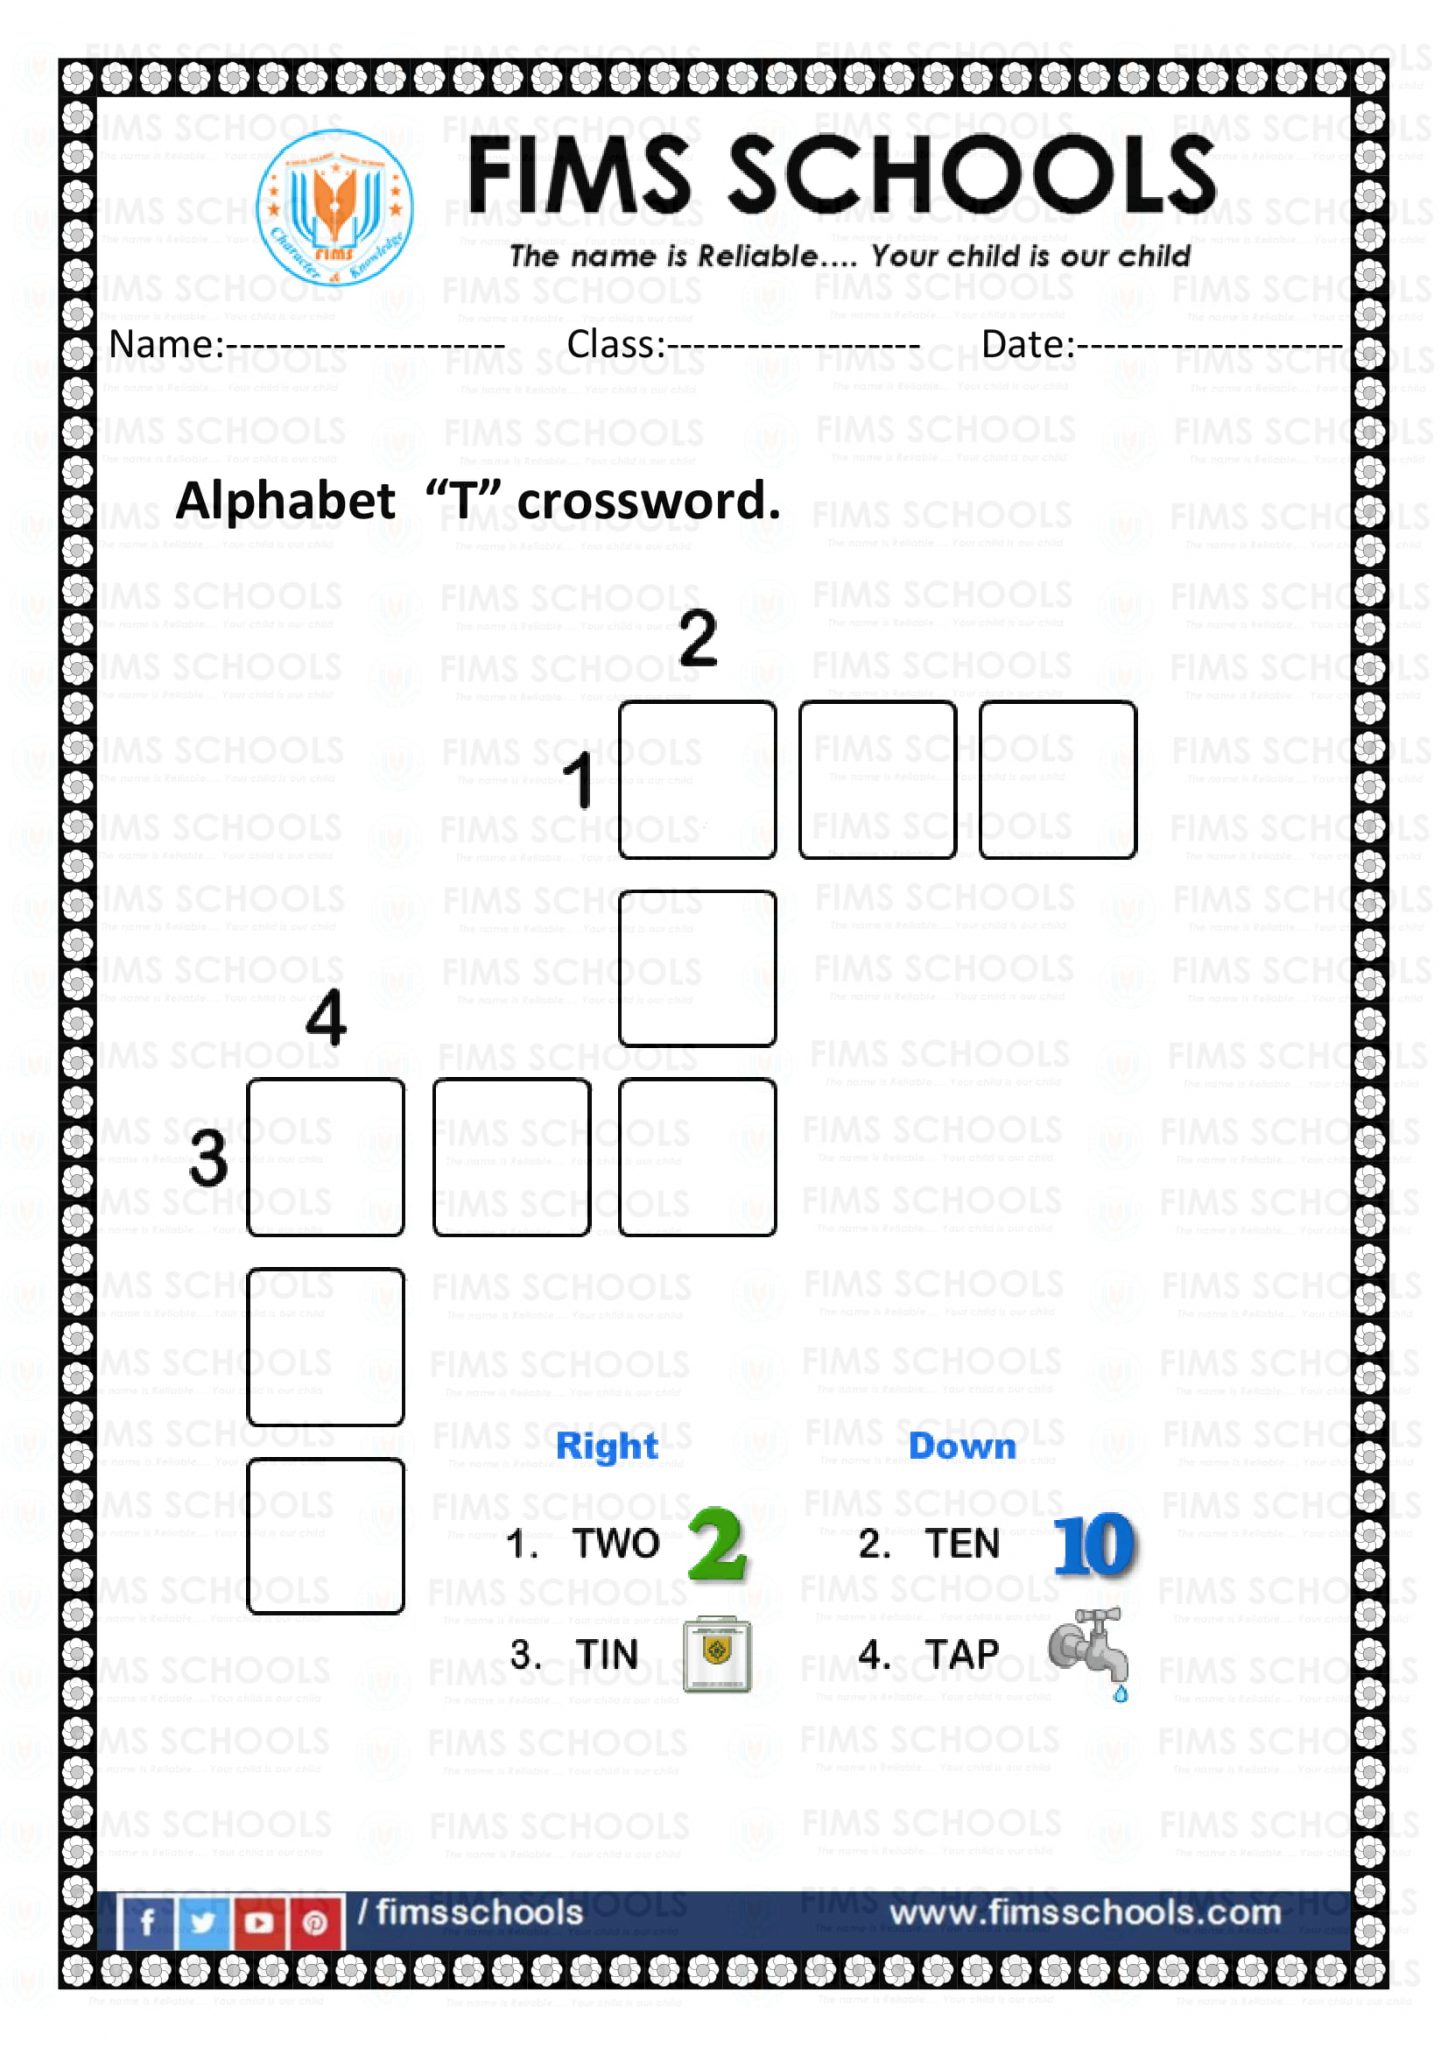 Alphabet A - Z crossword - Preschool FIMS SCHOOLS ...